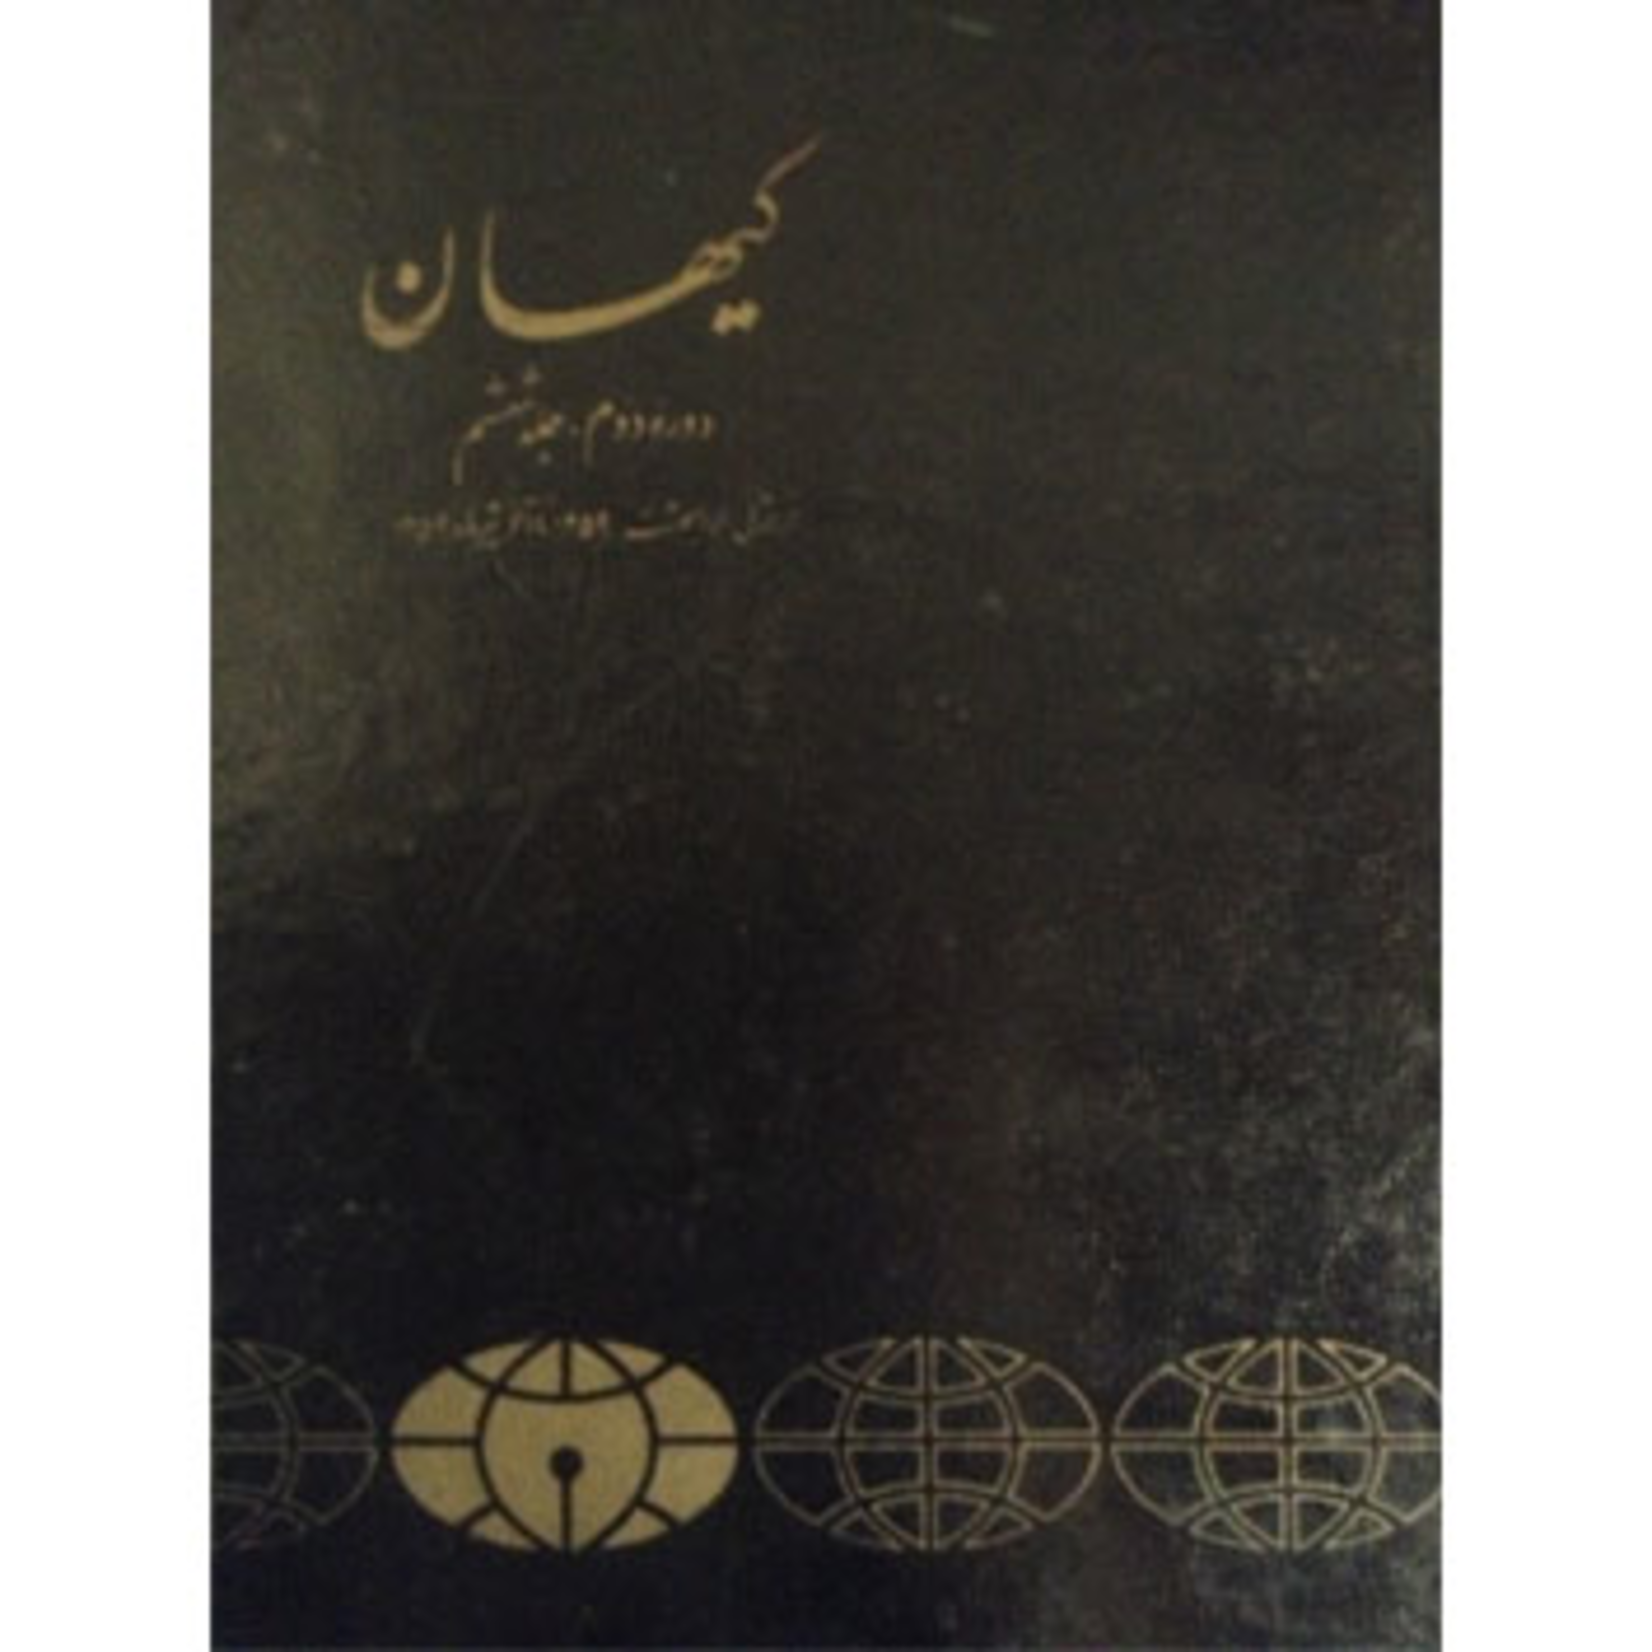 TAJHOME Kayhan Book Real Newspaper